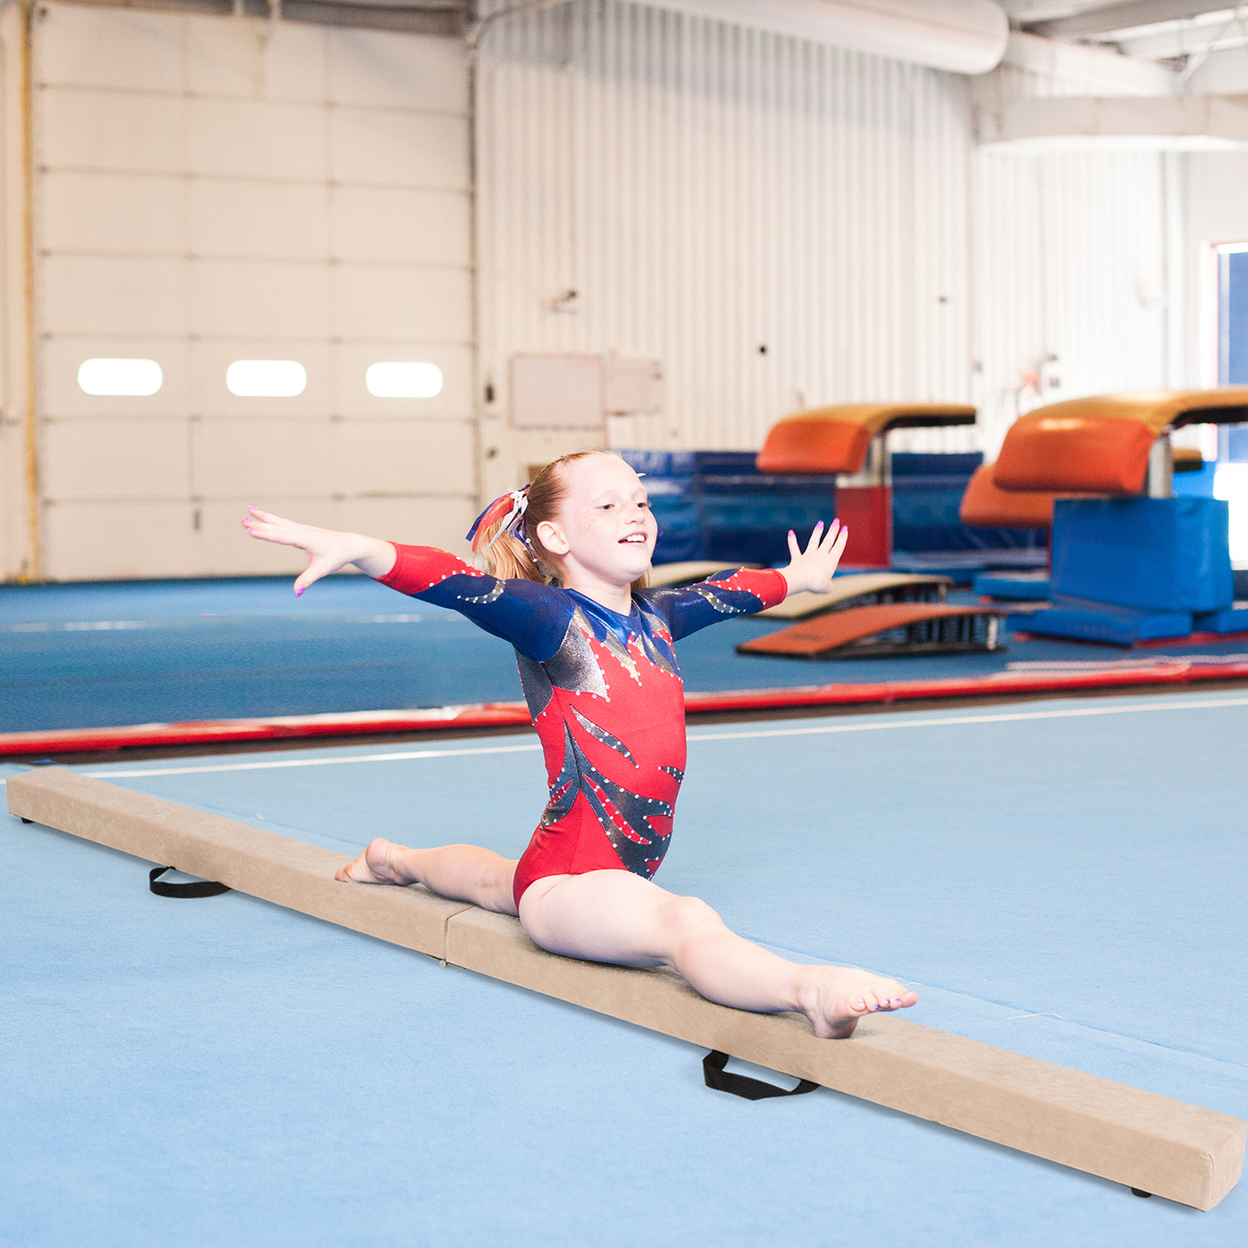 7FT Folding Gymnastic Beam Portable Floor Balance Beam W/Handles For Gymnasts - Blue